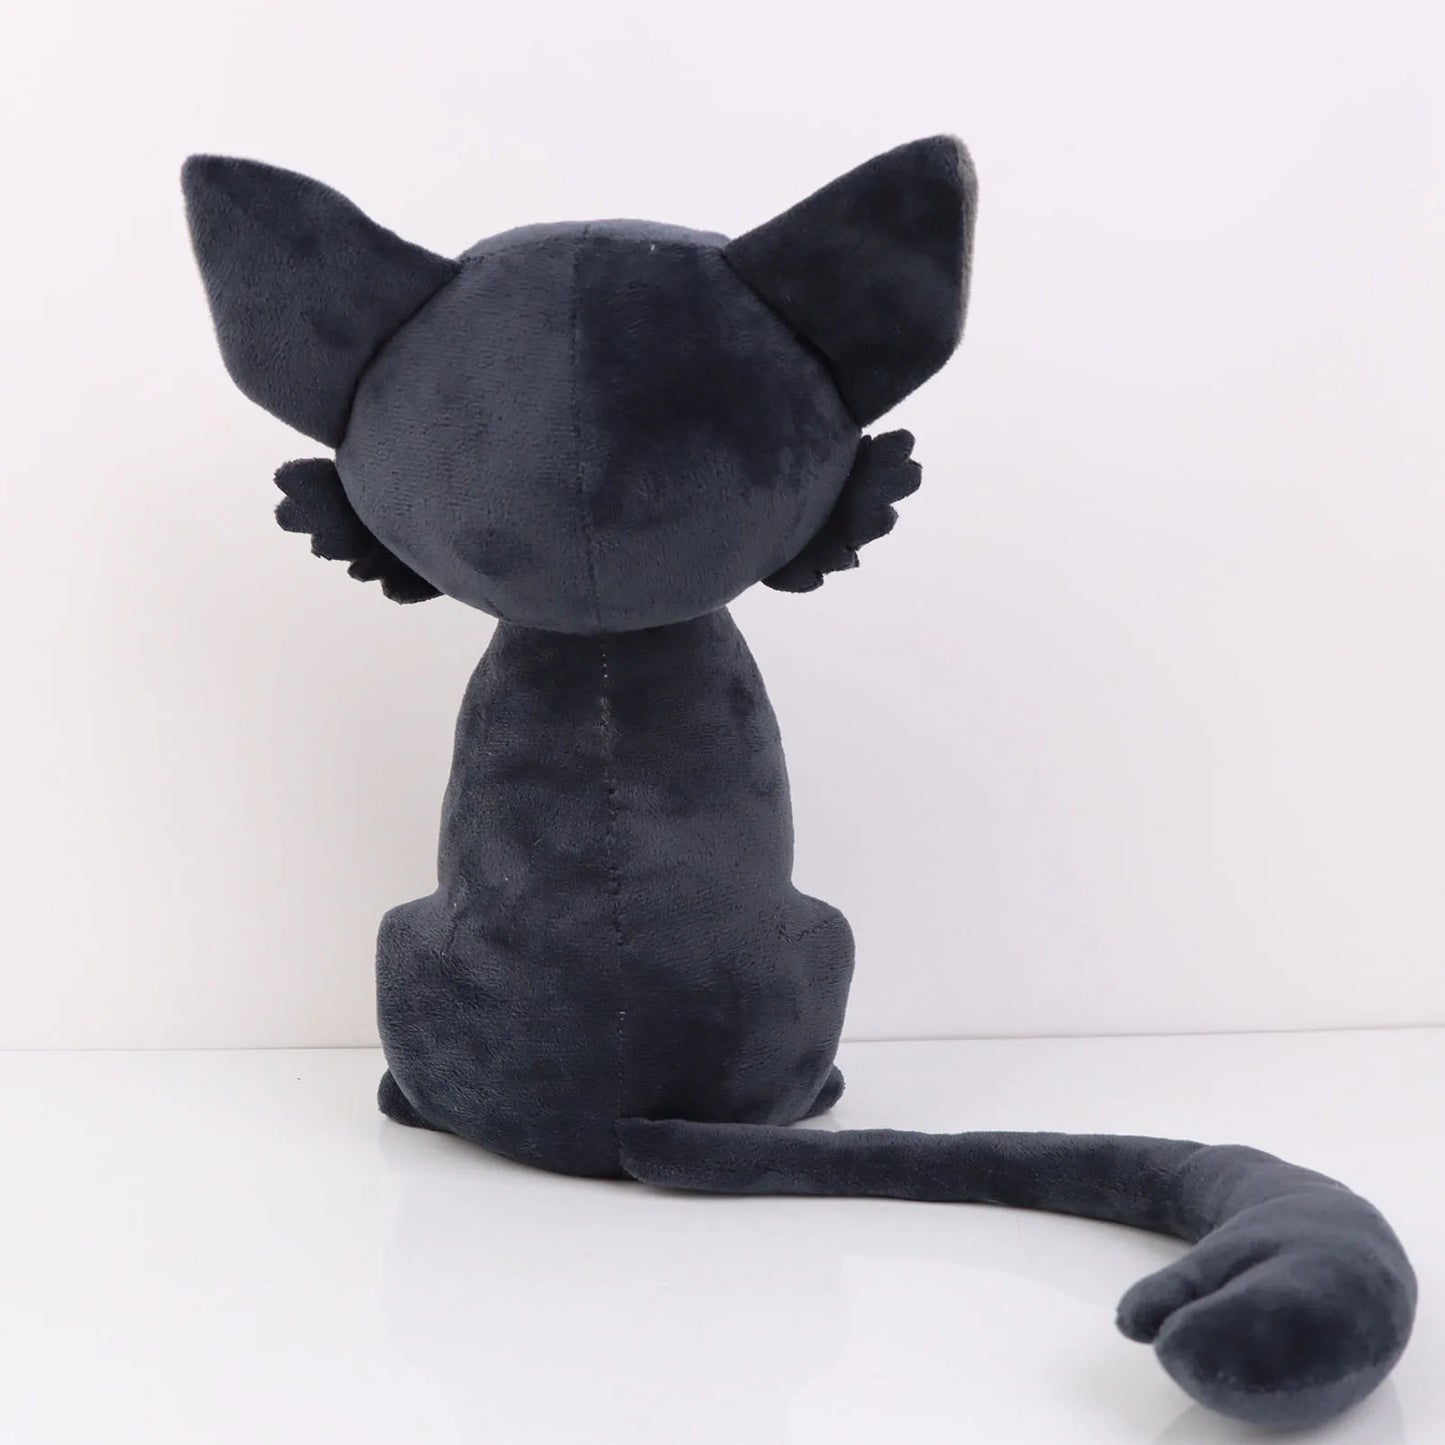 28cm Suzume No Tojimari Plush Toy Daijin Cat and Sadaijin Black Cat Plushie Soft Stuffed Animal Doll Birthday Gift for Baby Kids